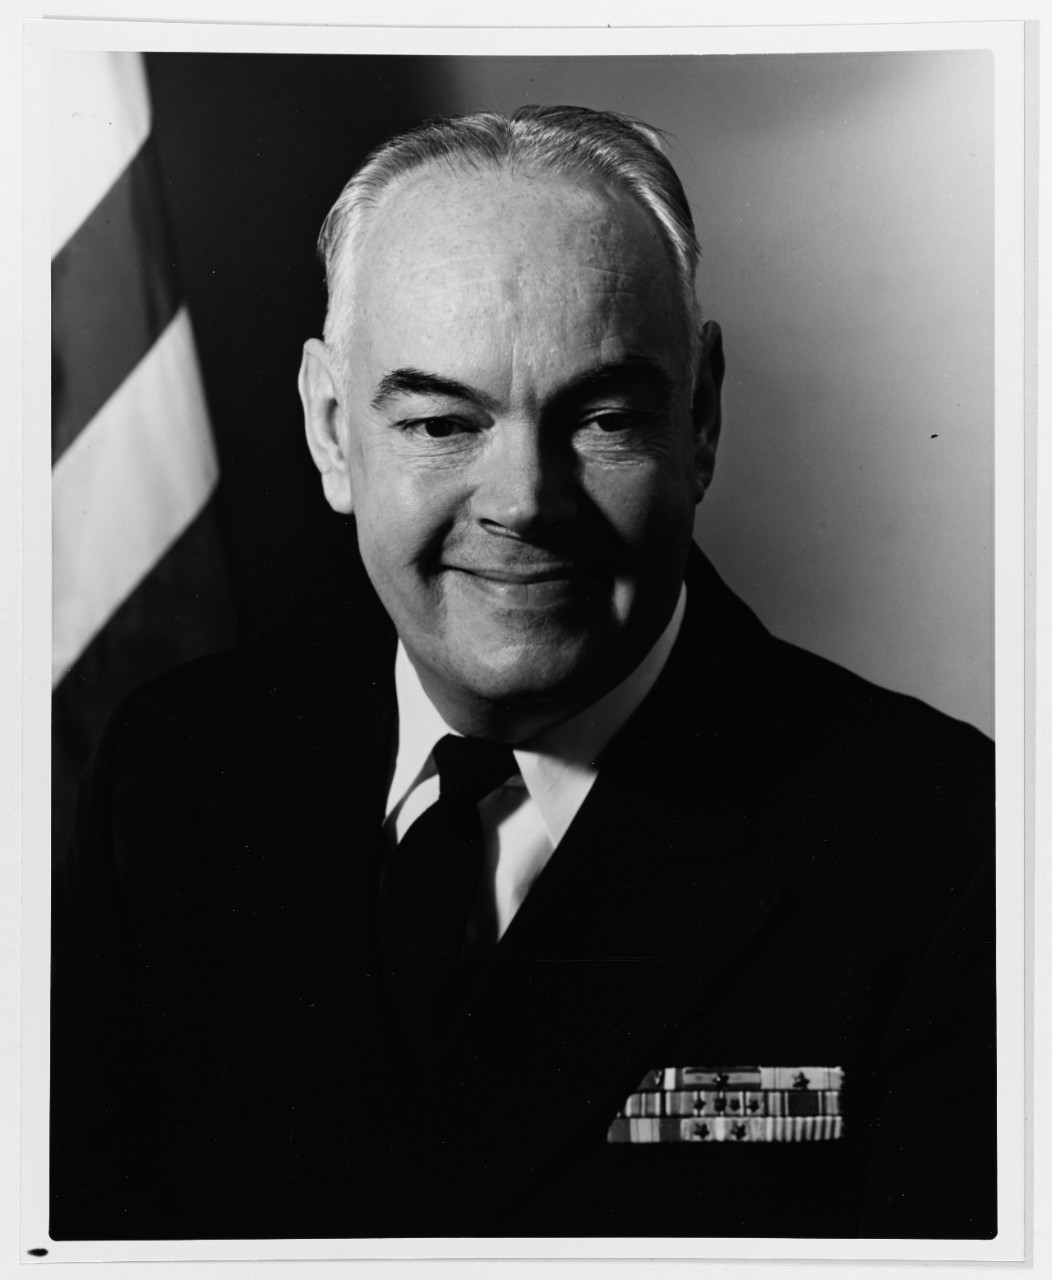 photo of man in Navy uniform smiling